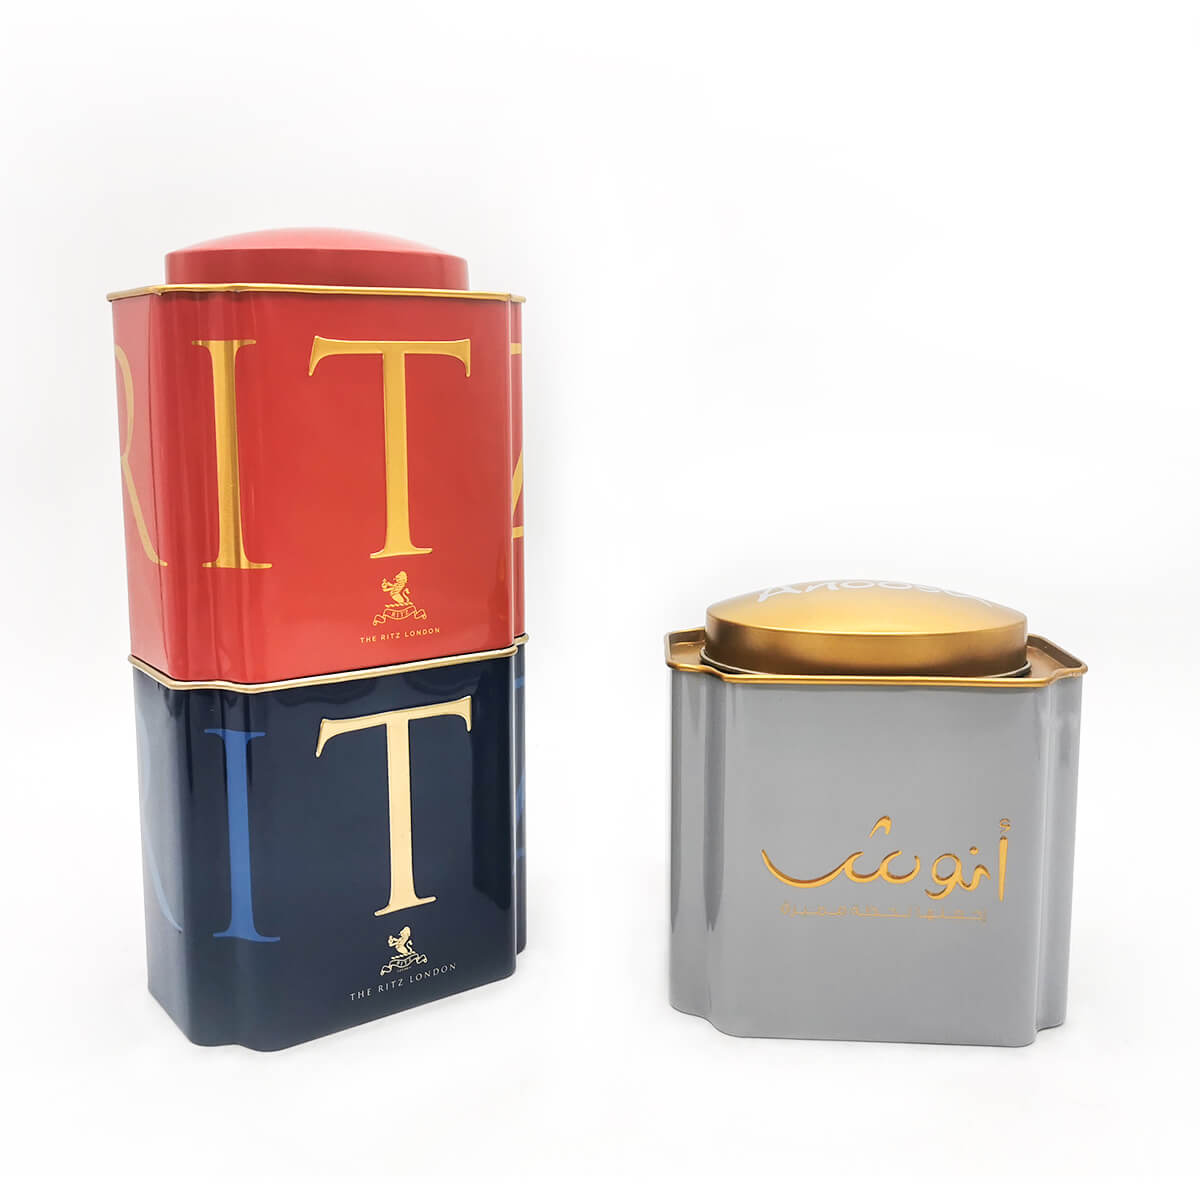 Neue Metall Geschenk Tee Dose Box | Geschenk Dose Box mit Tee